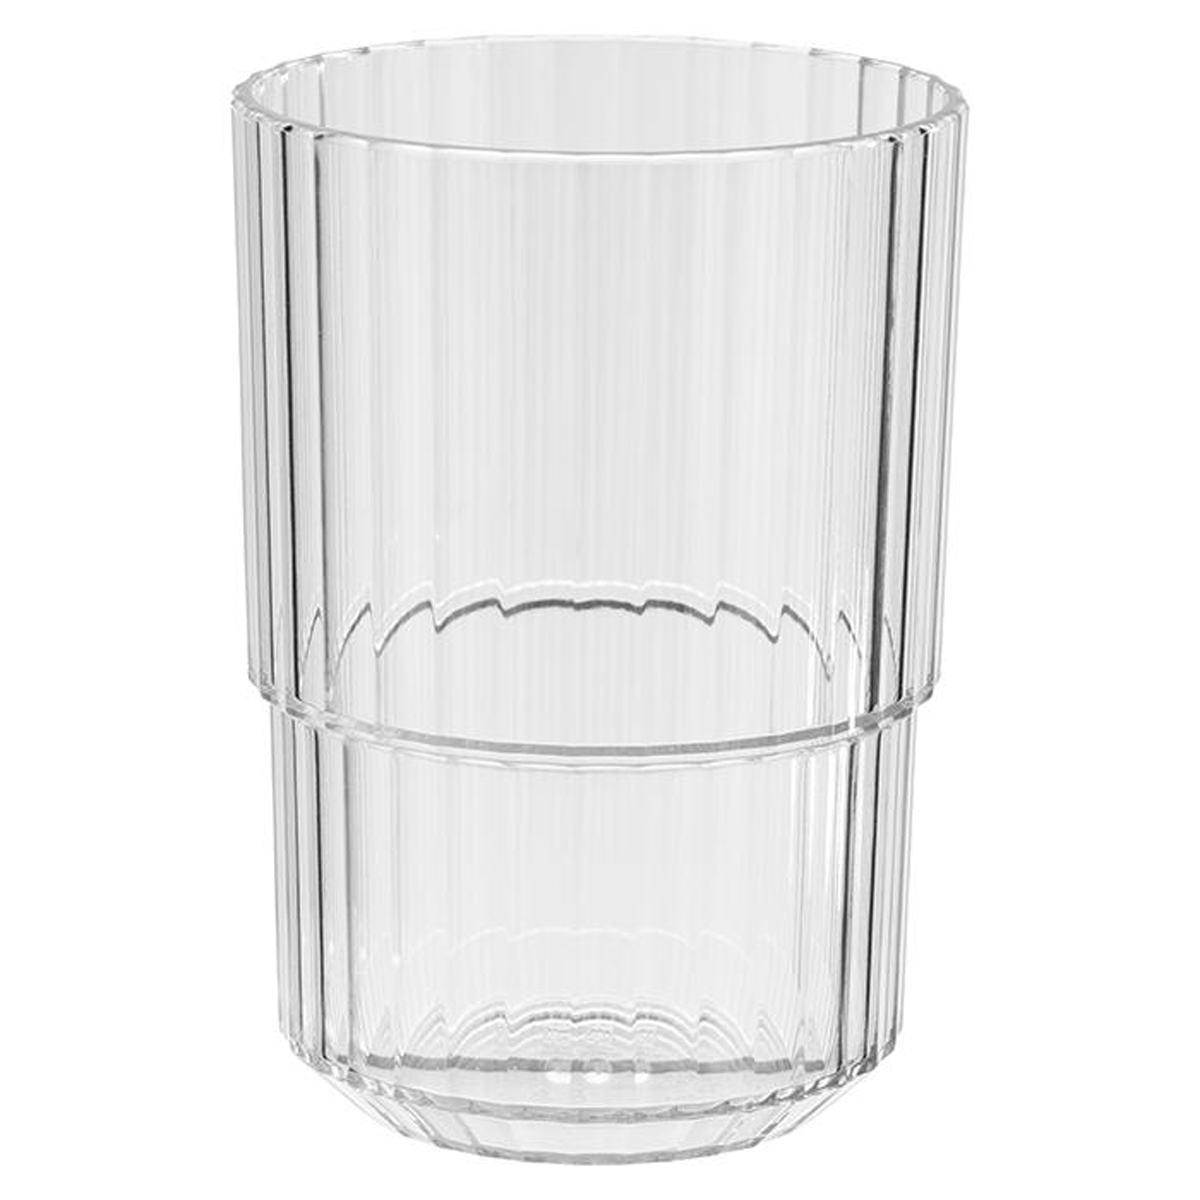 Becher Plastik Trinkglas 400 ml Transparent 6 Stück kaufen